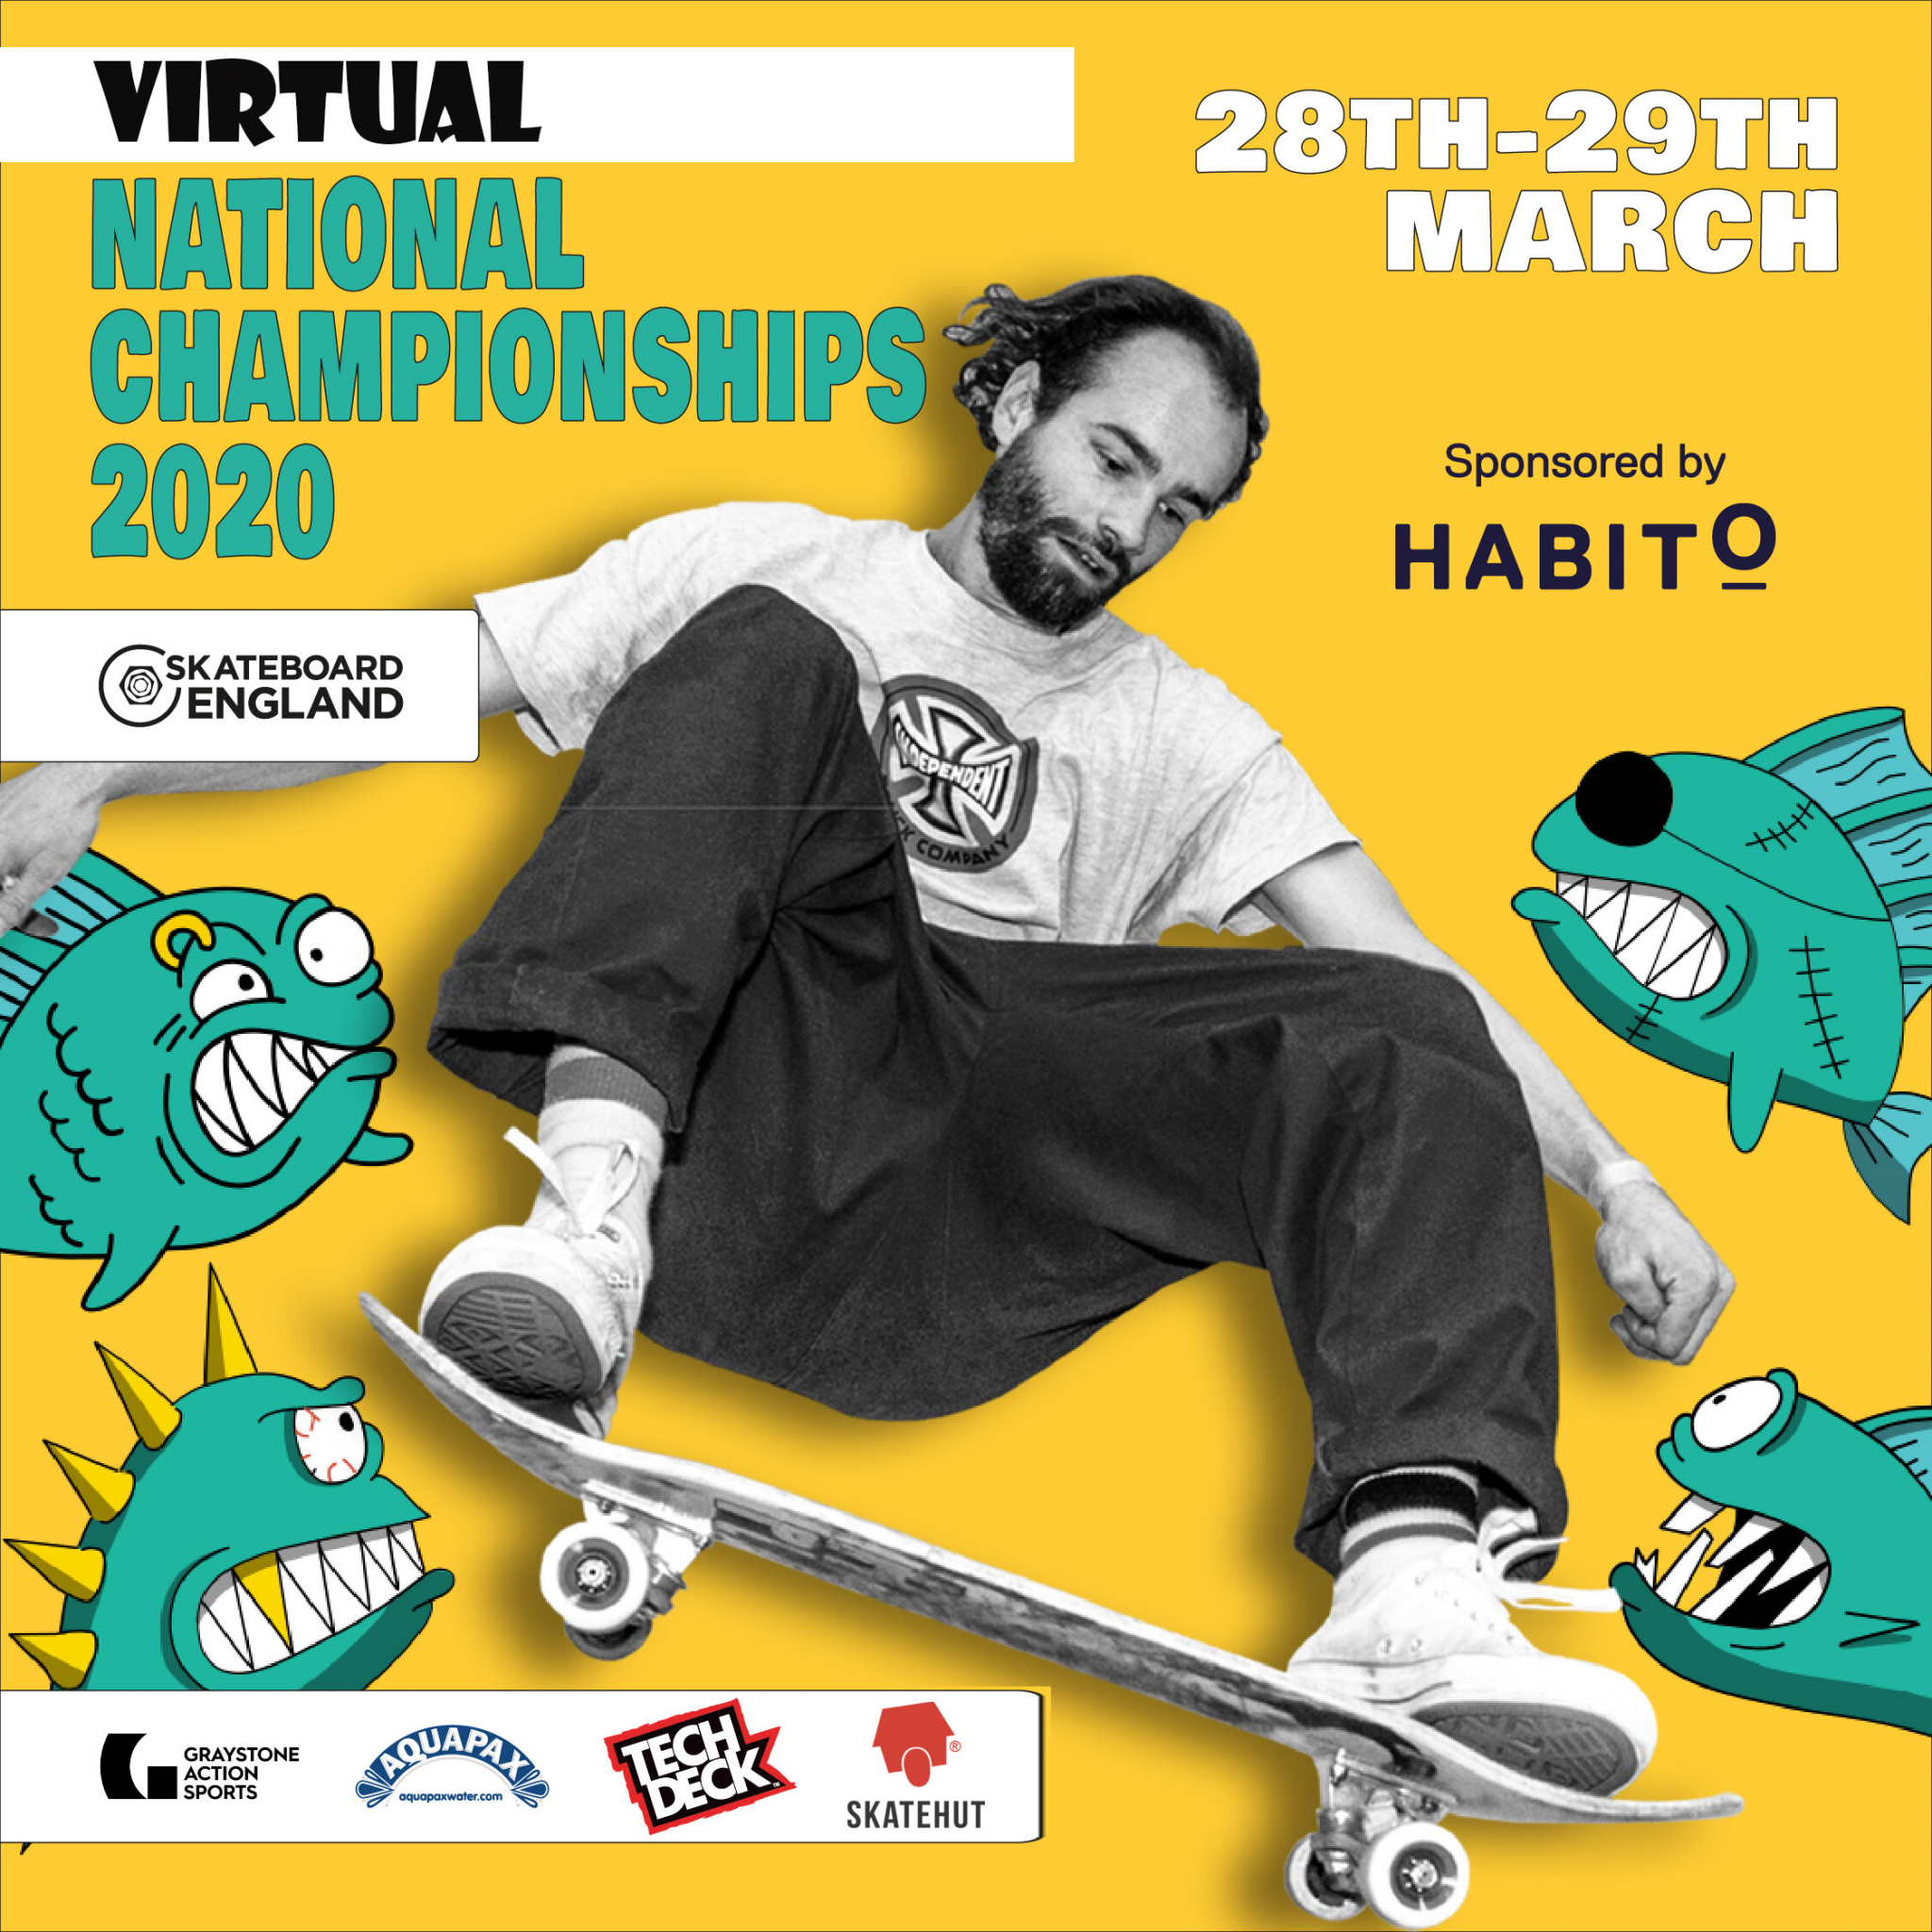 Skateboard England will host a virtual National Championships ©Skateboard England